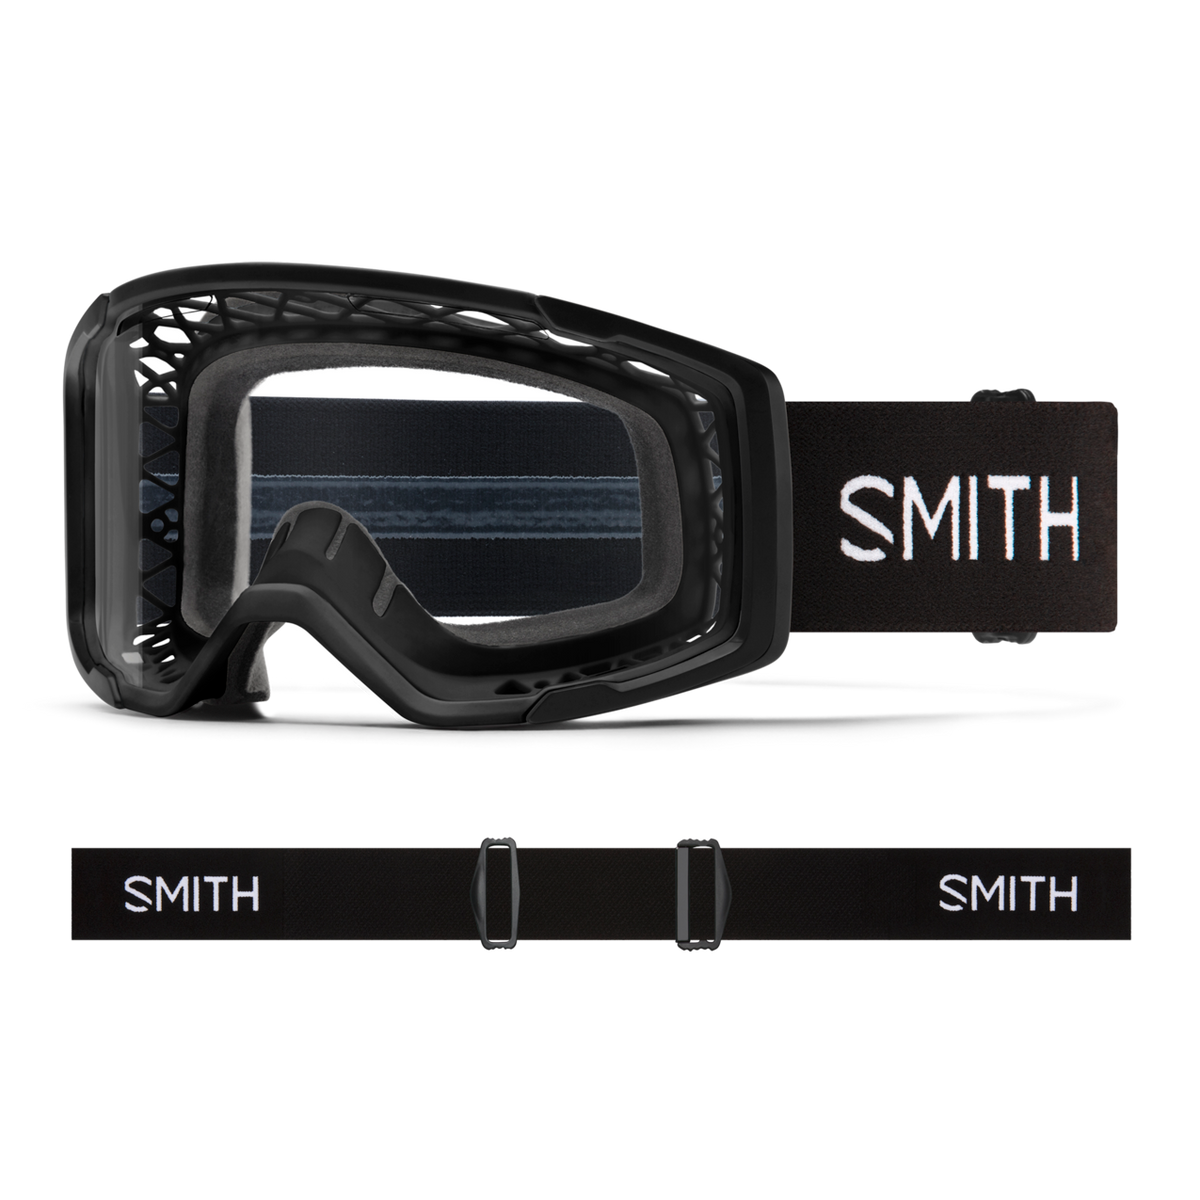 Smith Optics Rhythm MTB Goggles